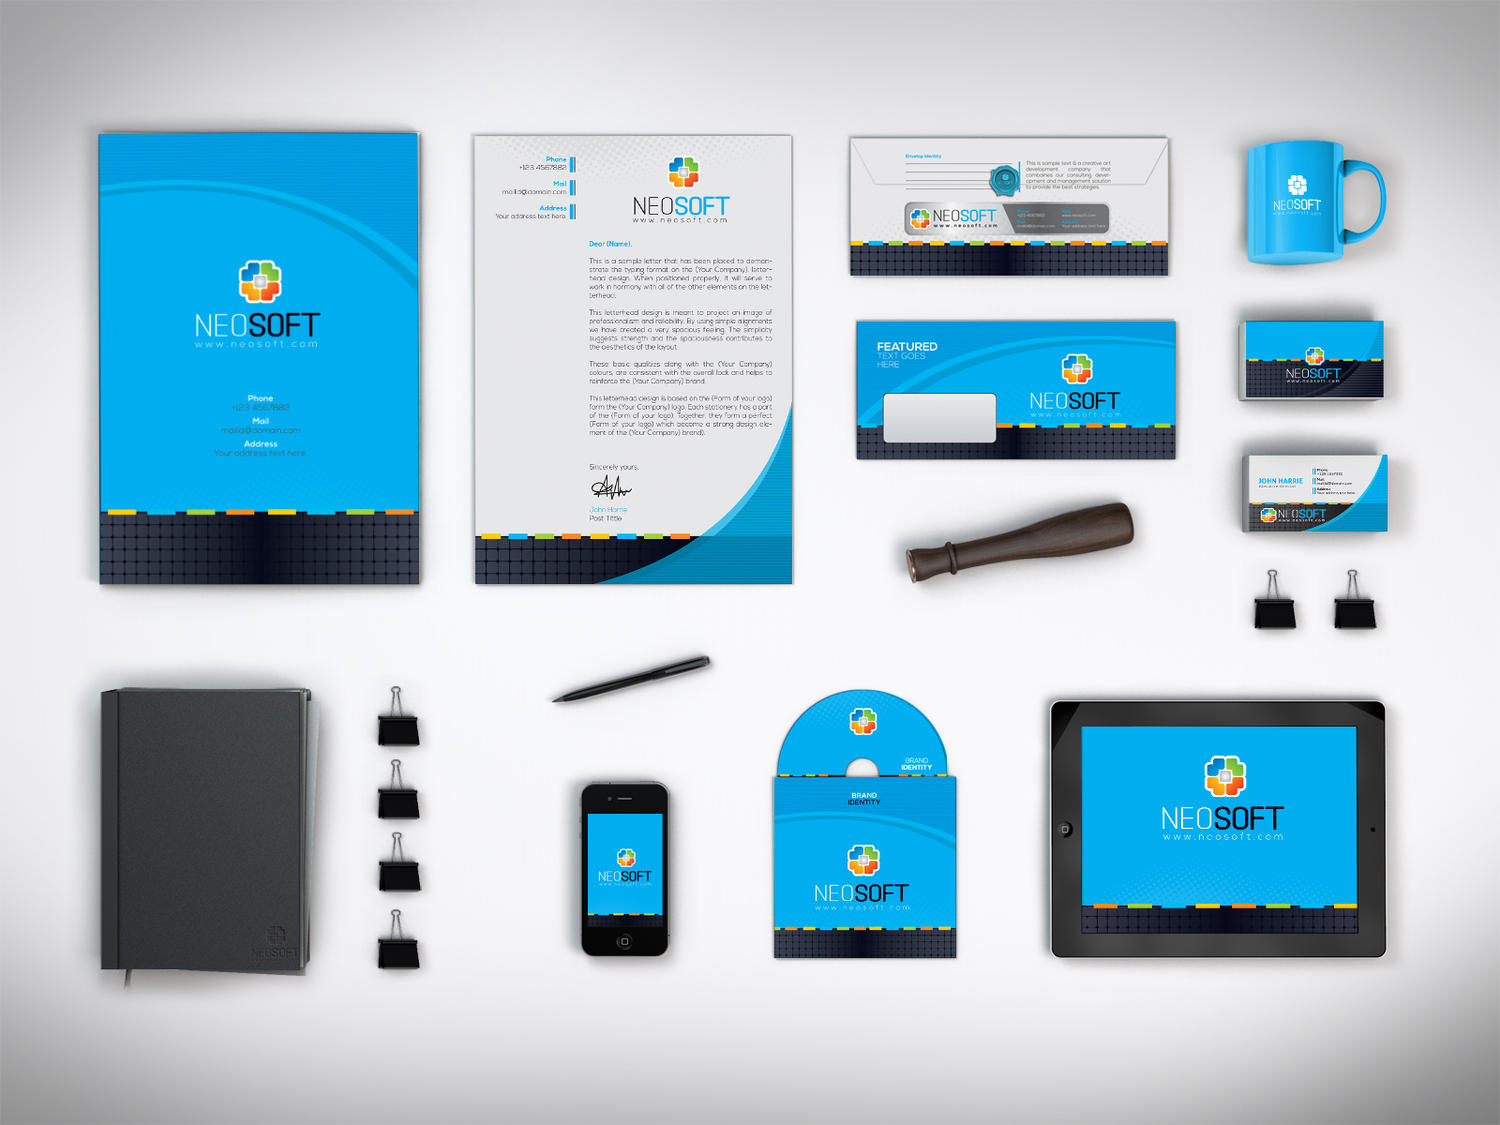 Corporate Identity Package Design by ContestDesign on Envato Studio